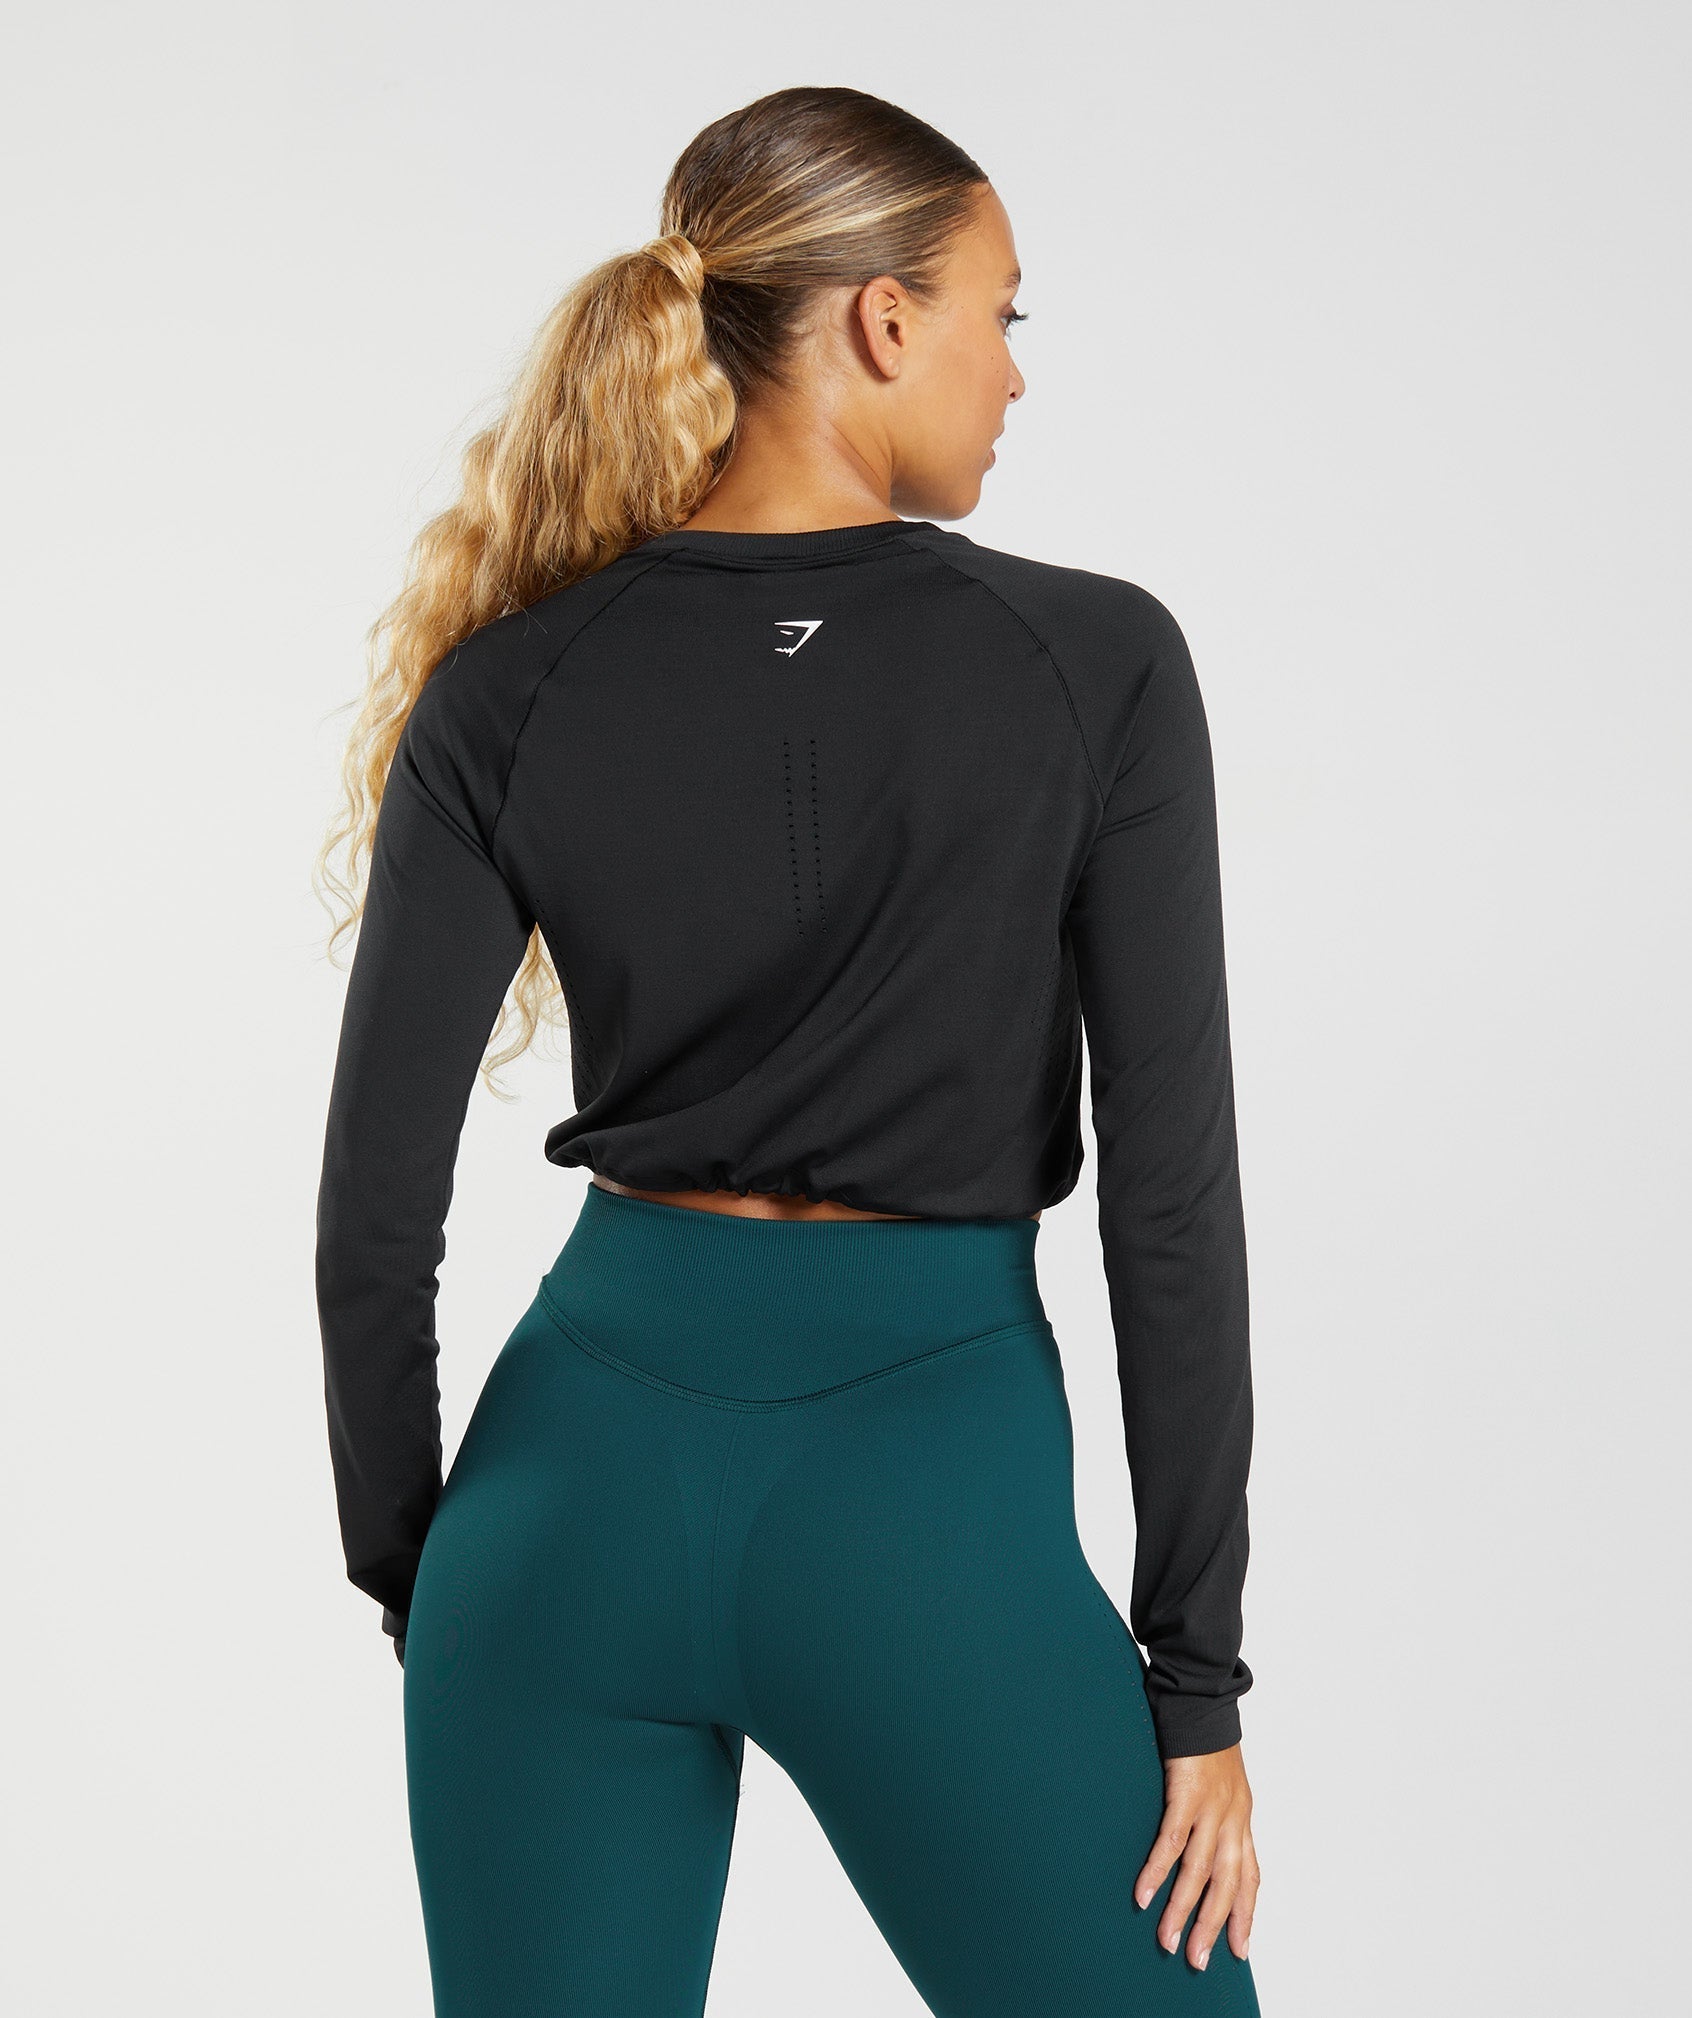 SweatyRocks Women's Activewear Long Sleeve Hooded Sheer Mesh Sports Jacket  Workout Crop Top Black S at  Women's Clothing store